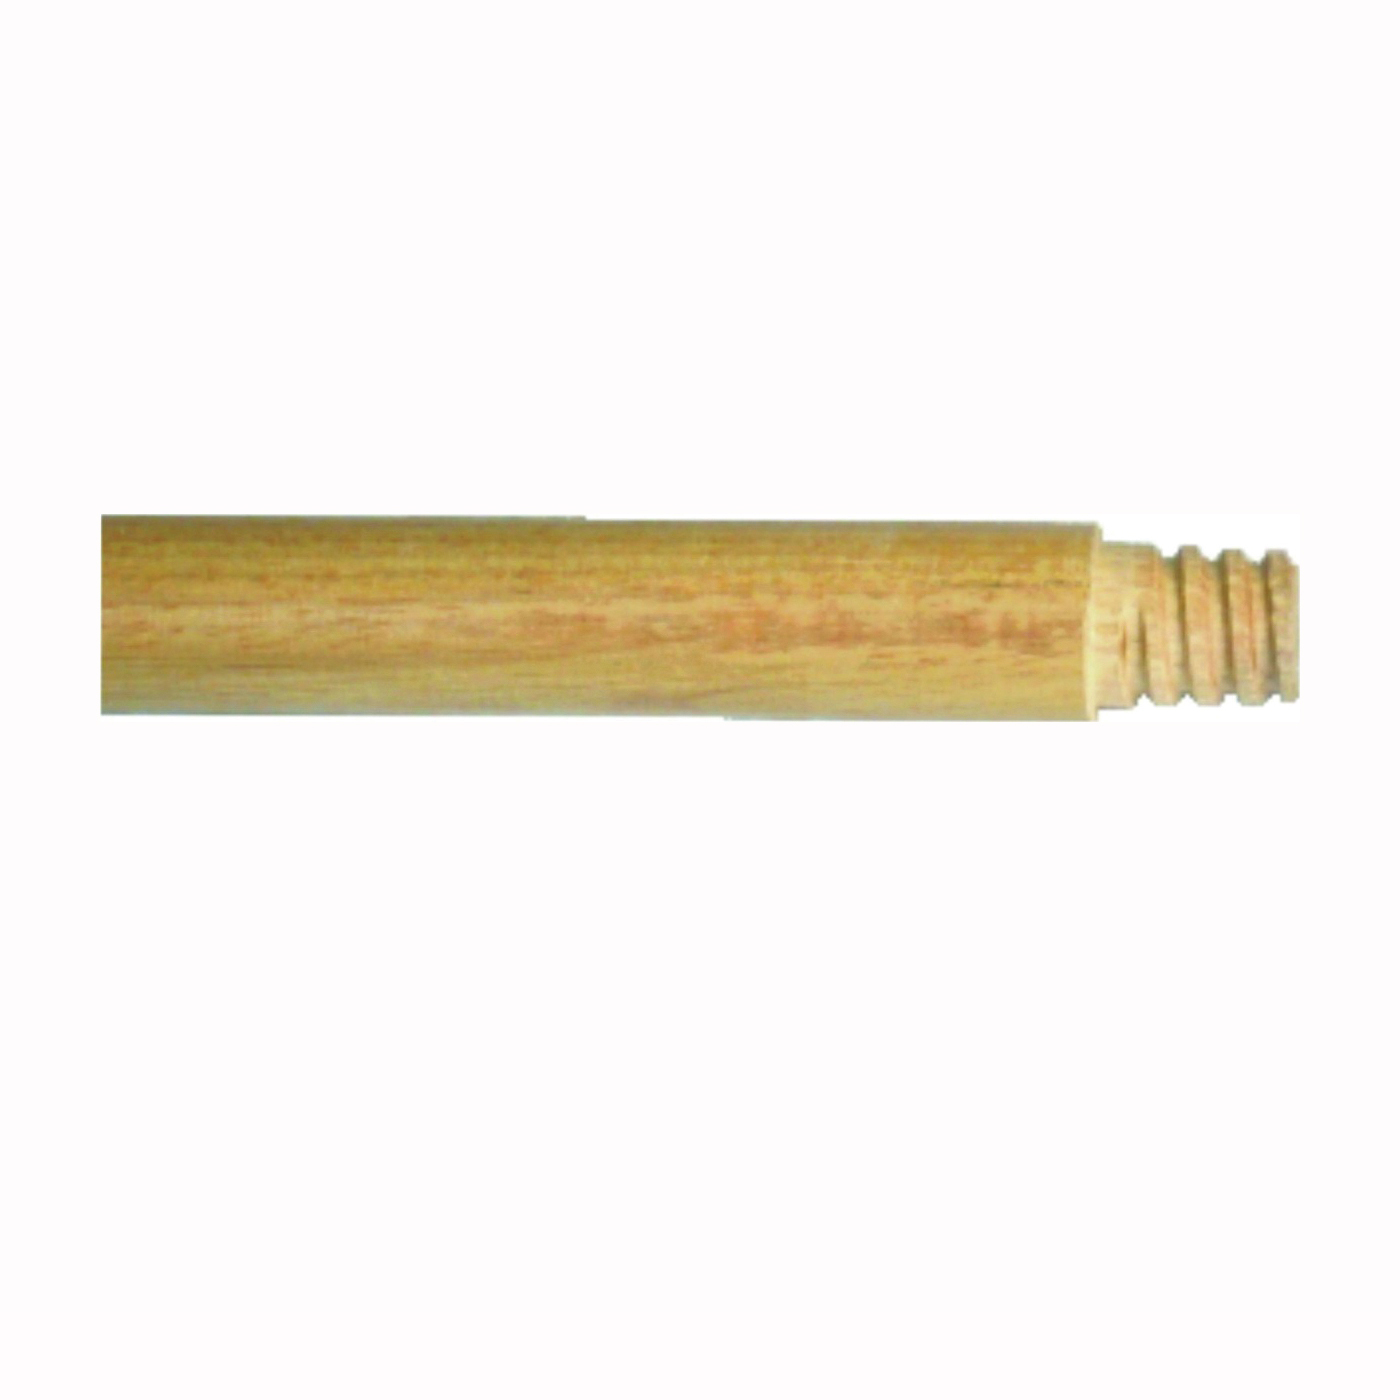 533-12 Broom Handle, 15/16 in Dia, 60 in L, Threaded, Hardwood